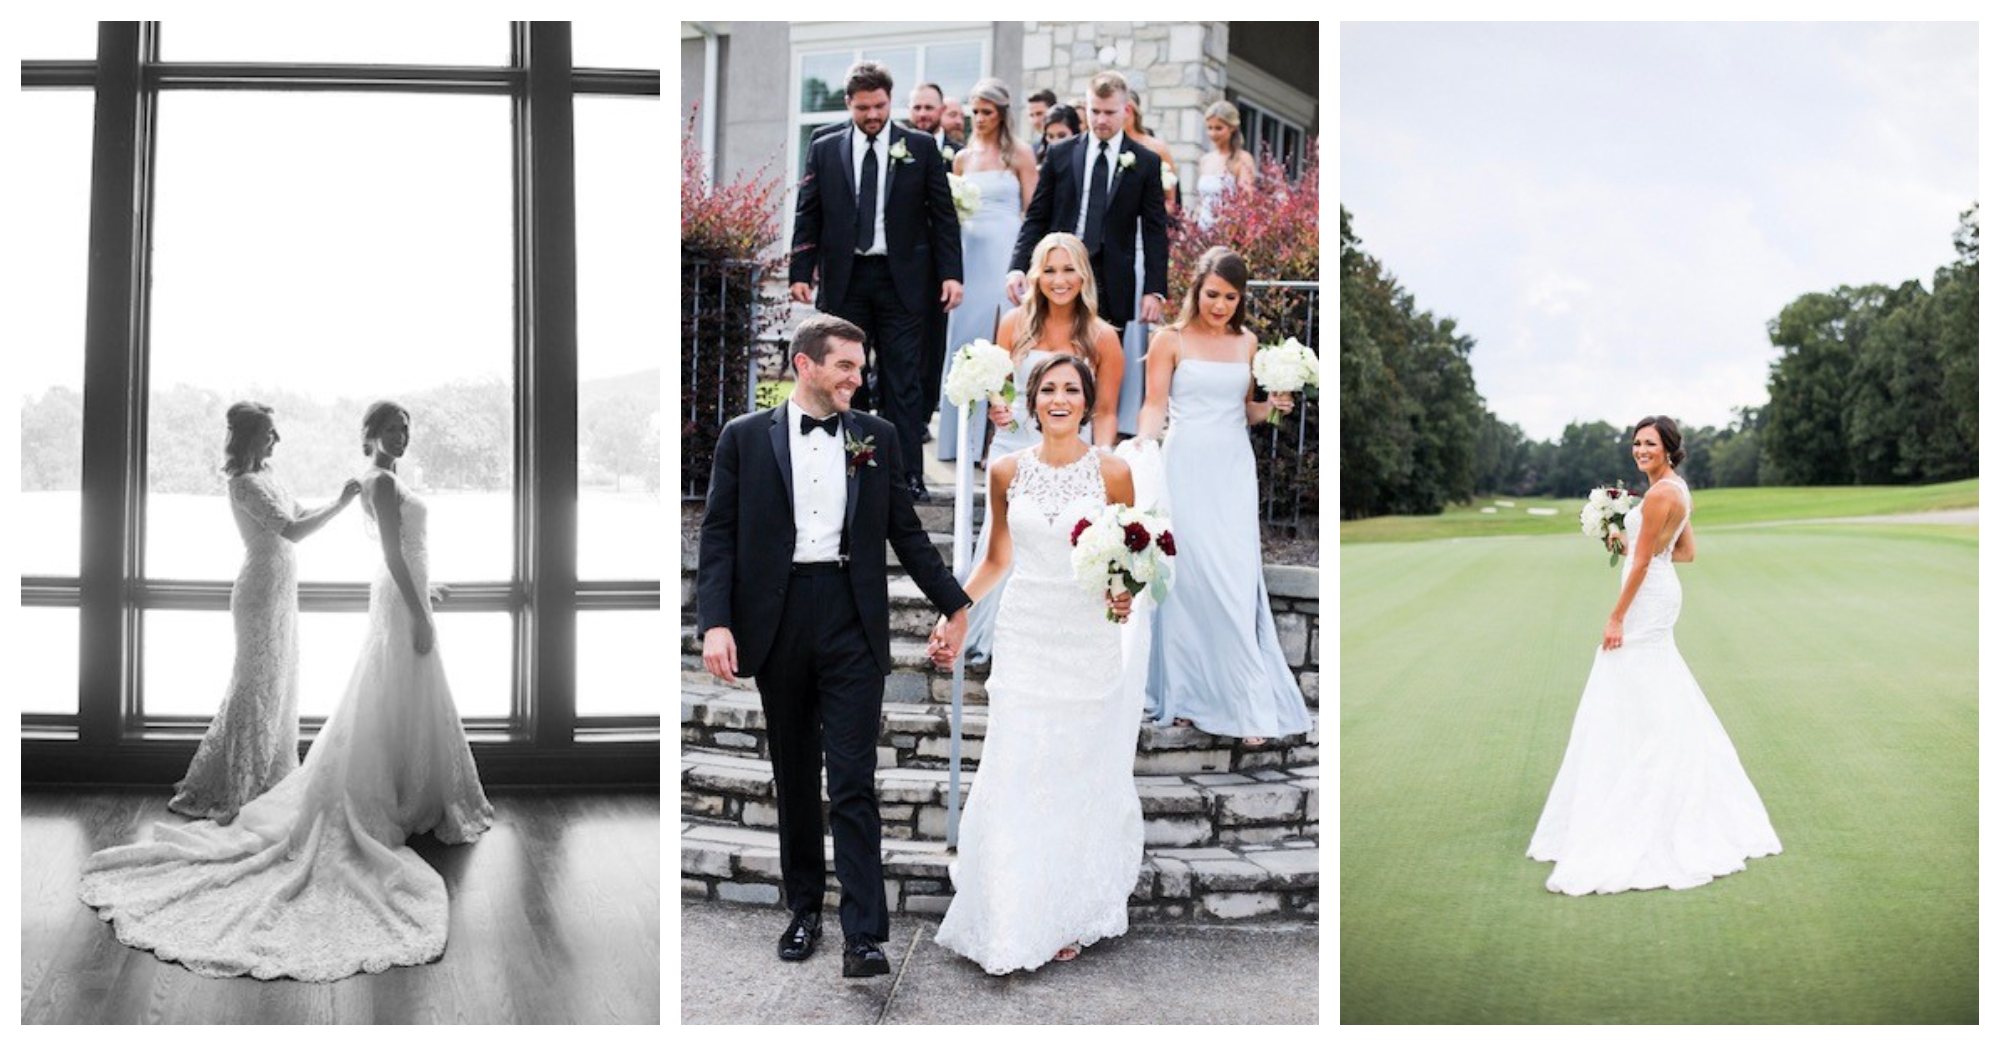 Renee and Luke's 2020 Wedding Reception: 'Greystone Made it Magical'